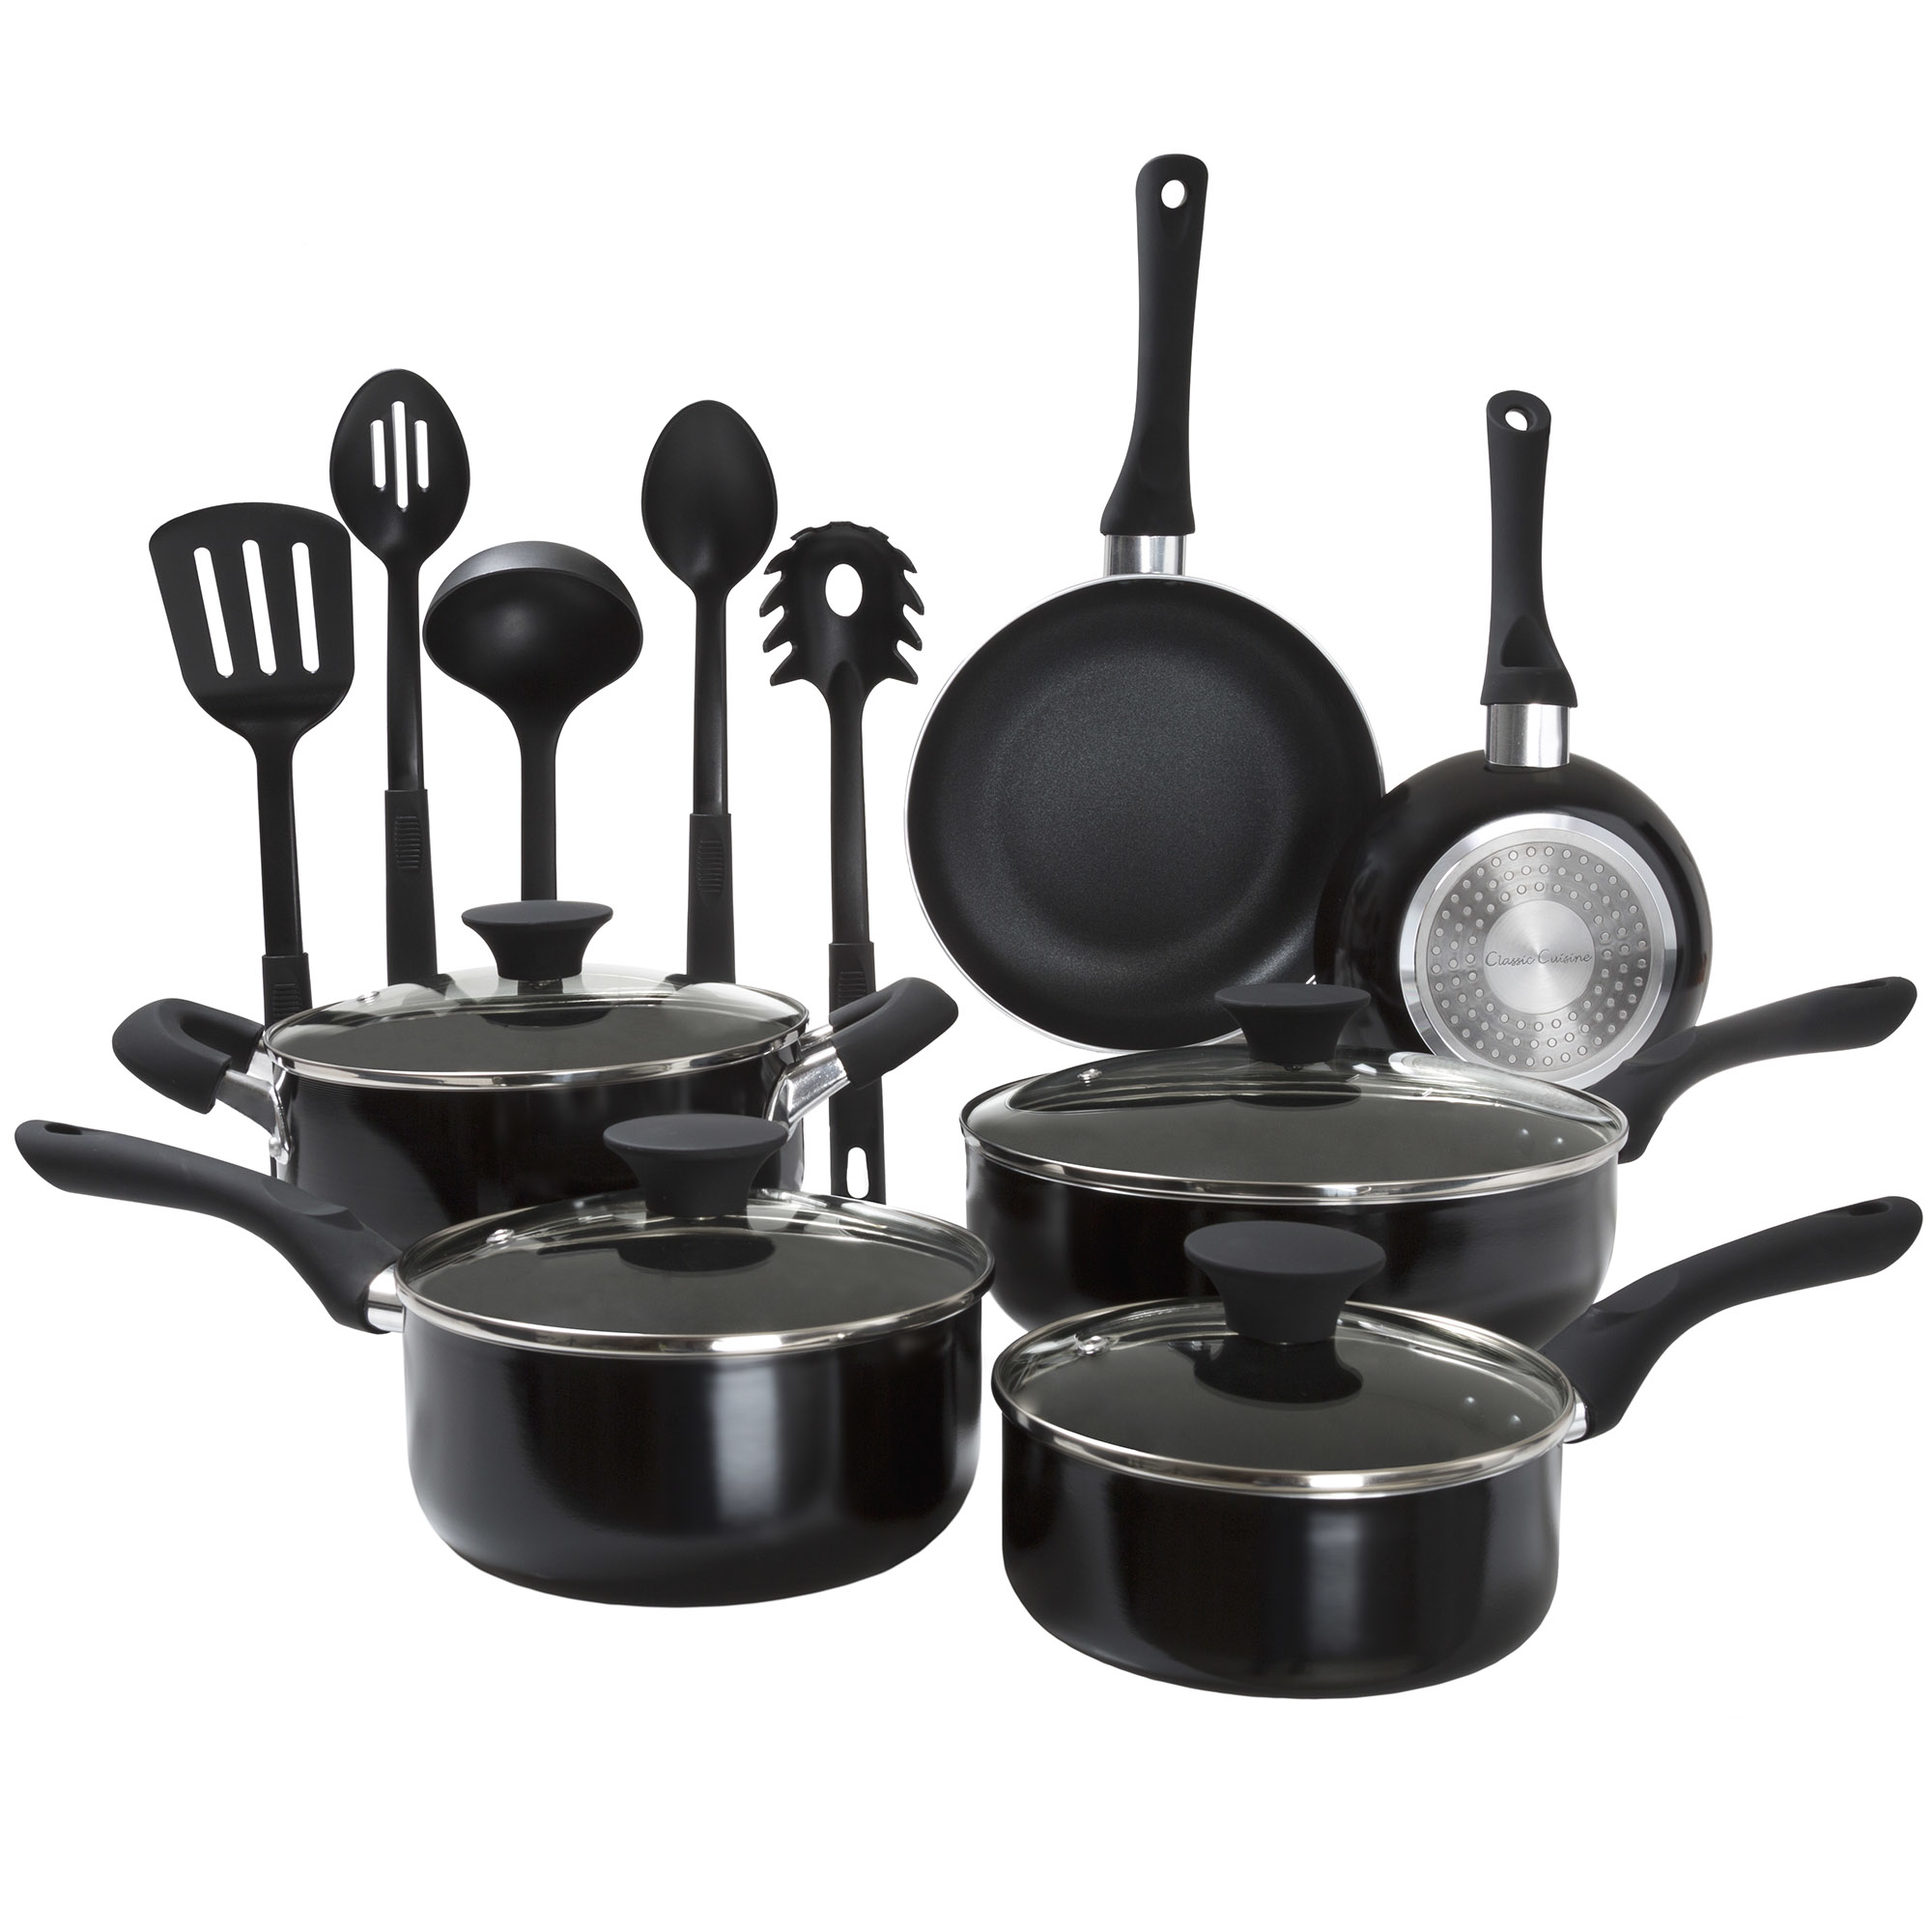 15 Piece Non Stick Long Lasting Induction Ready Cookware Set Pots and Pans Utensils Lids